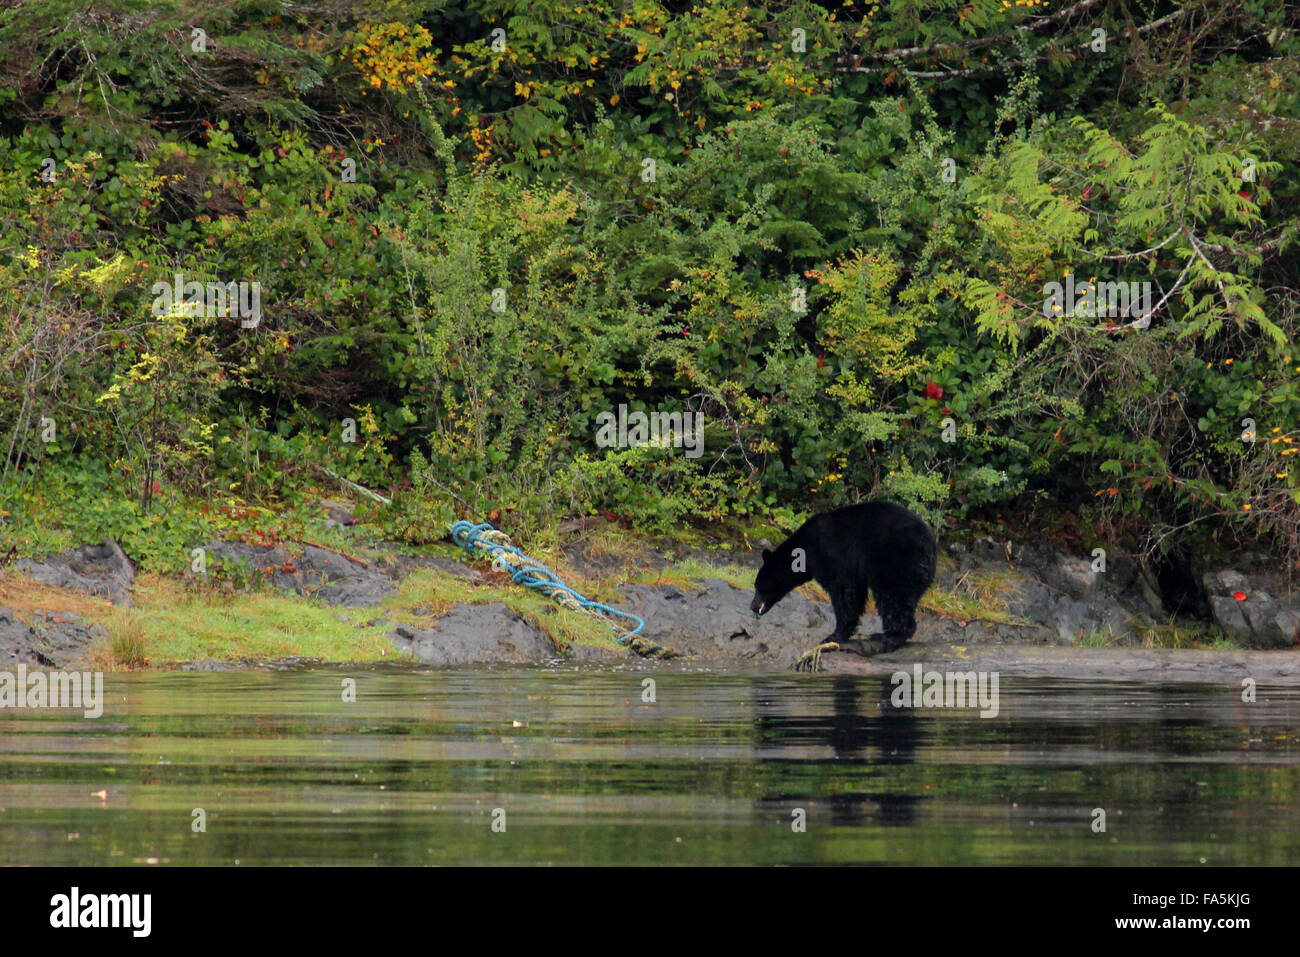 Black bear hunting on a log in Kildonan on the Pacific Rim coast of Vancouver Island, Canada. Stock Photo